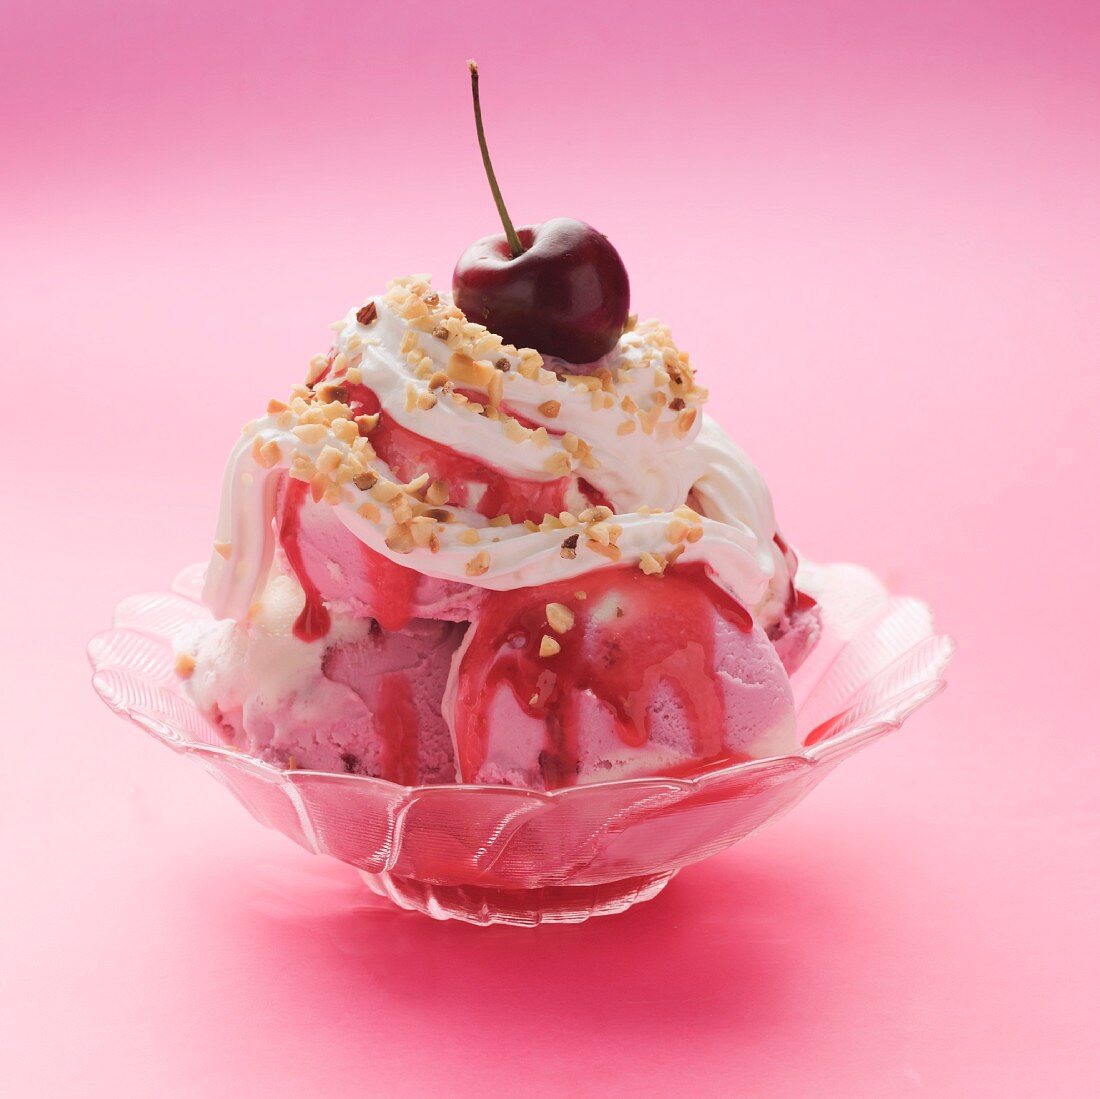 Raspberry and vanilla ice cream with cream and raspberry sauce